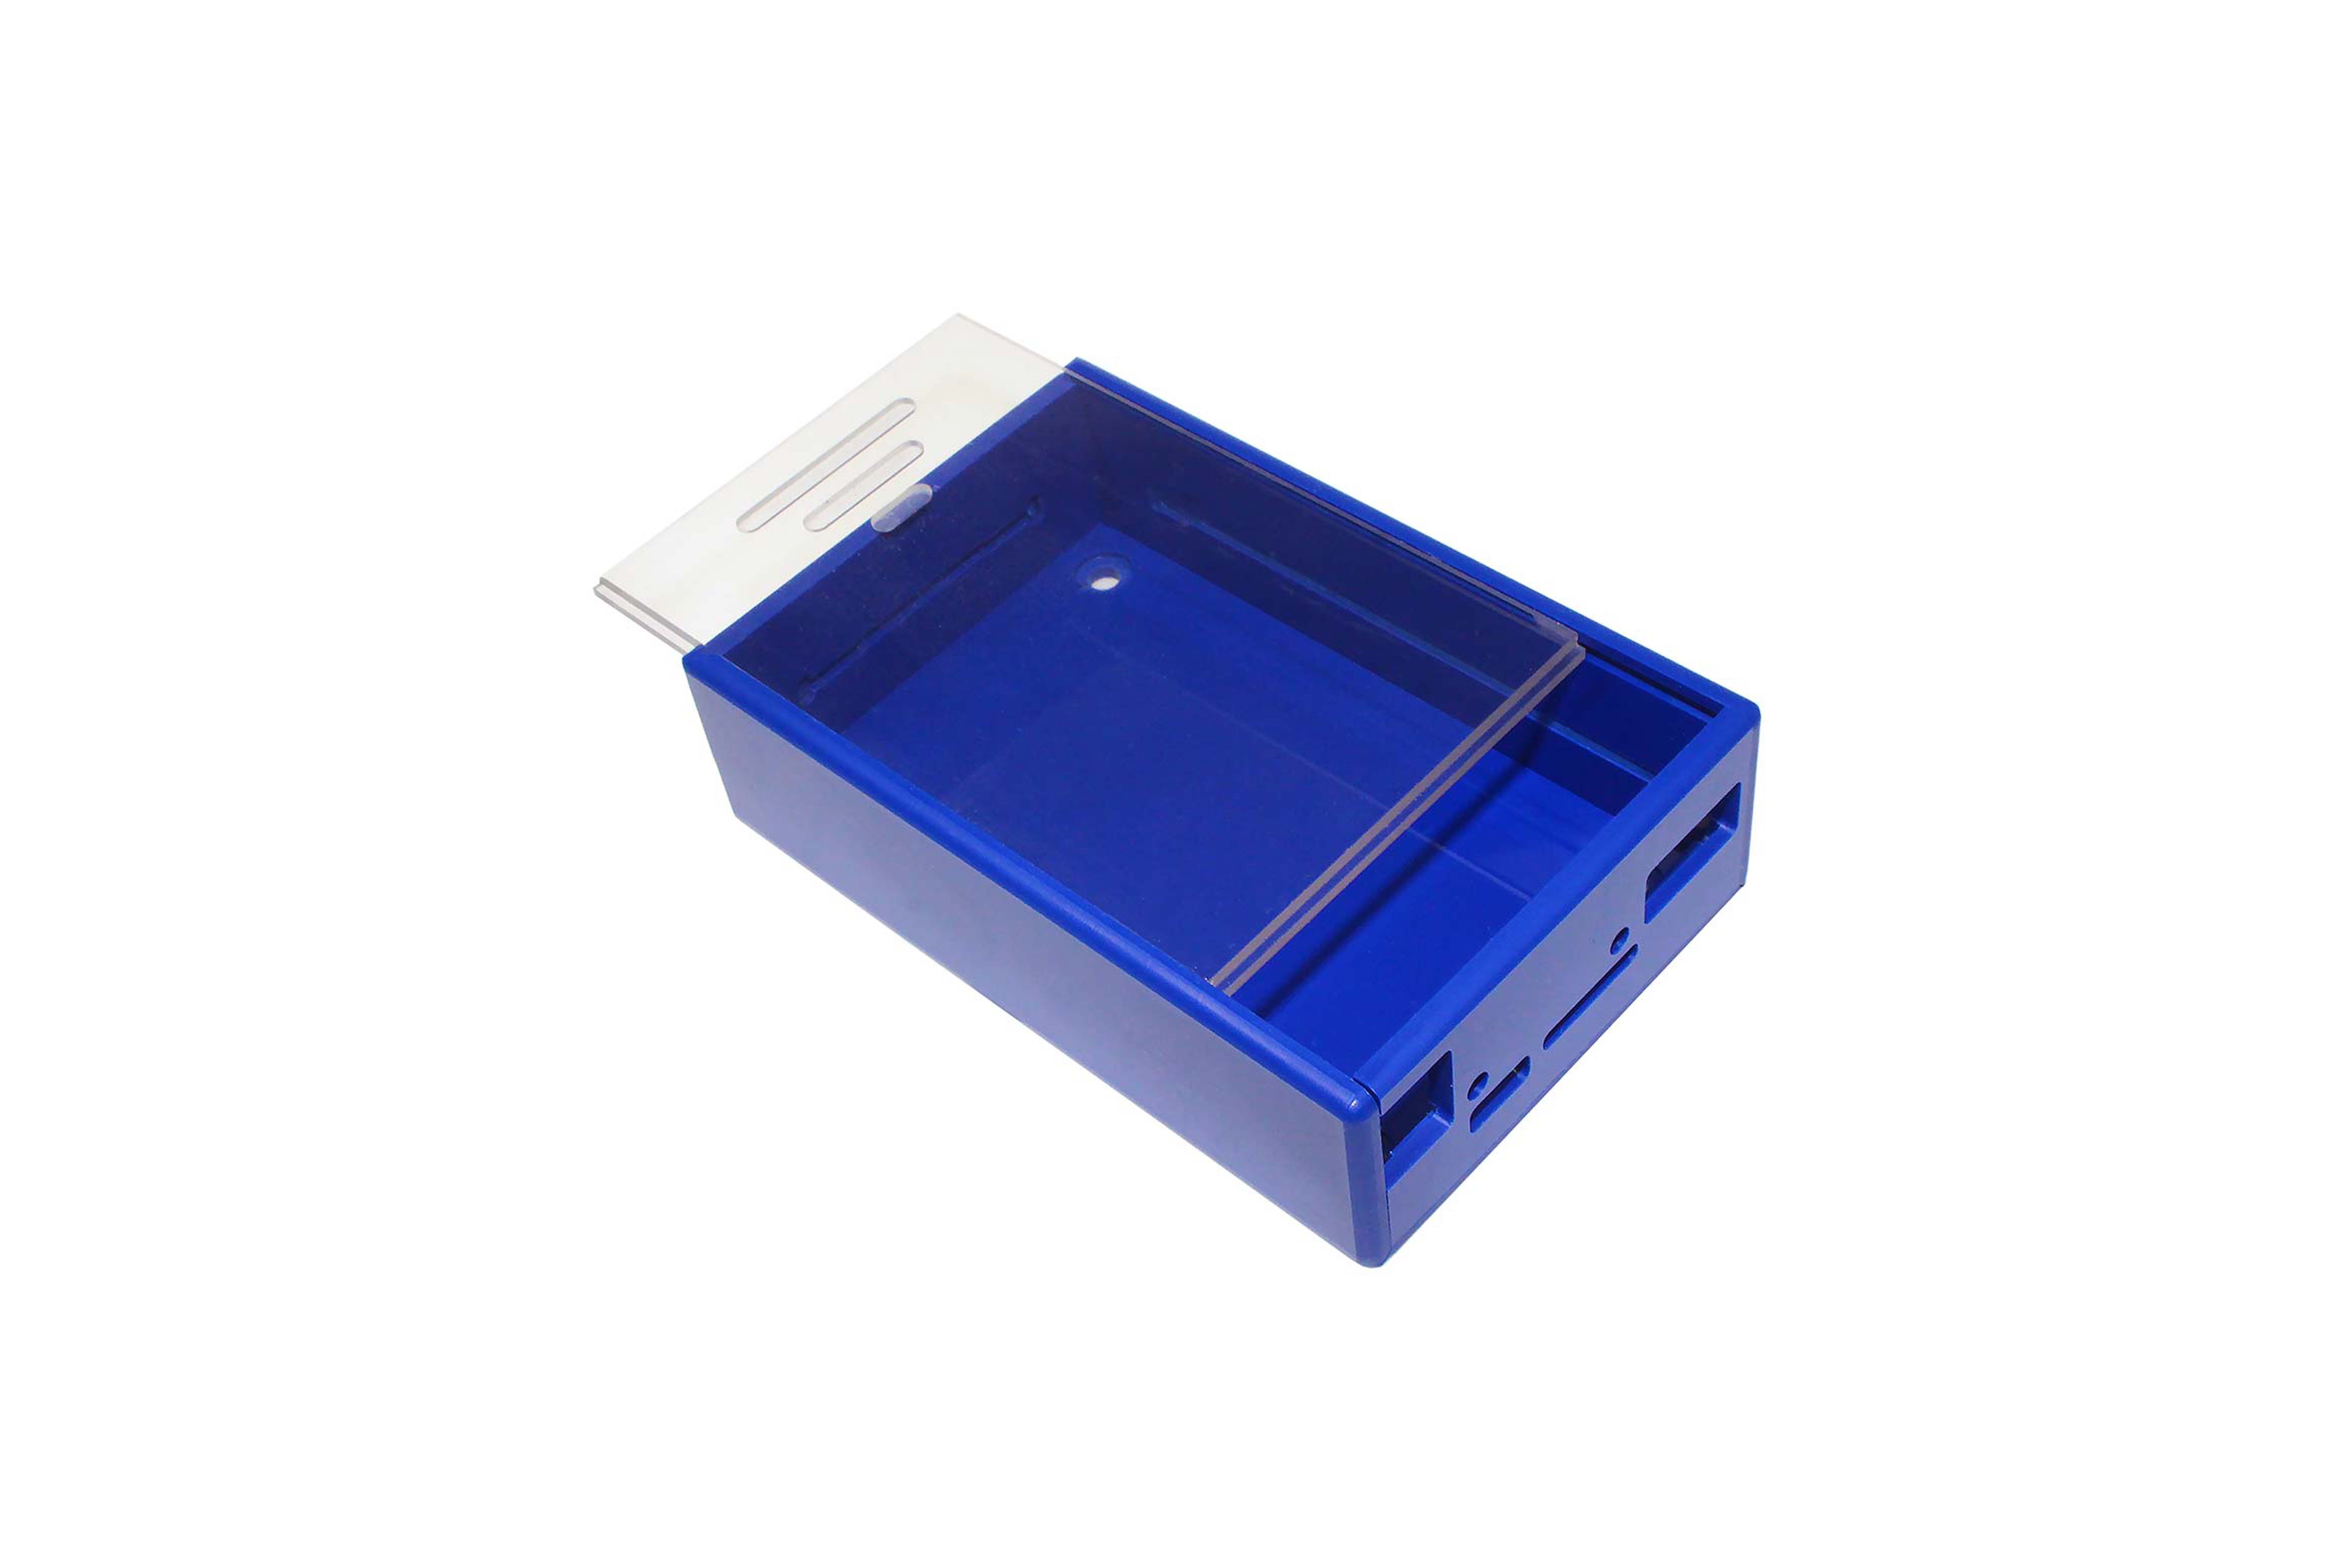 Designspark Beaglebone Blue Case, Blue/Clear